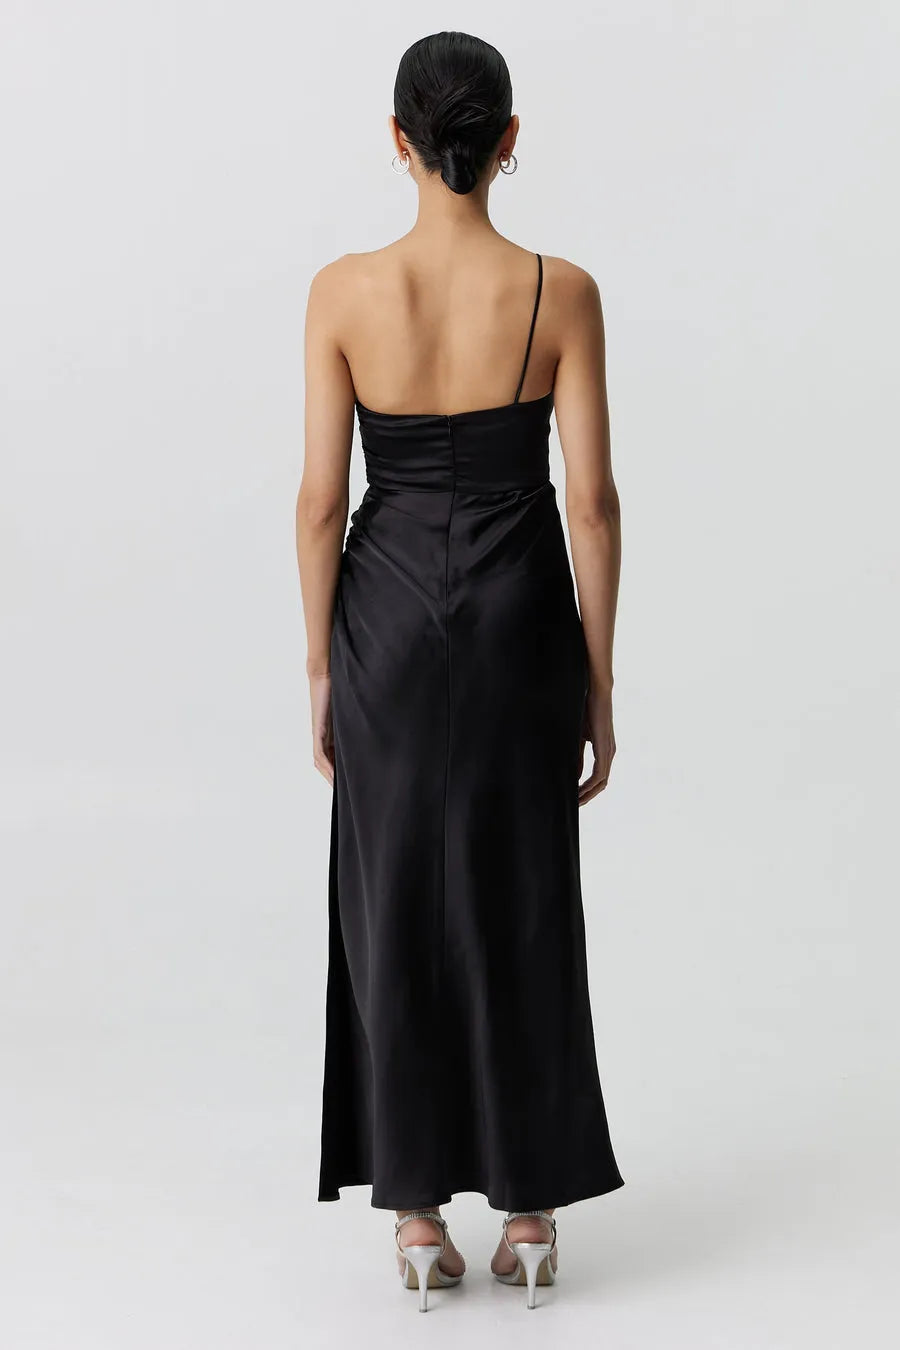 Third Form | Satin Gather One Shoulder Dress - Black